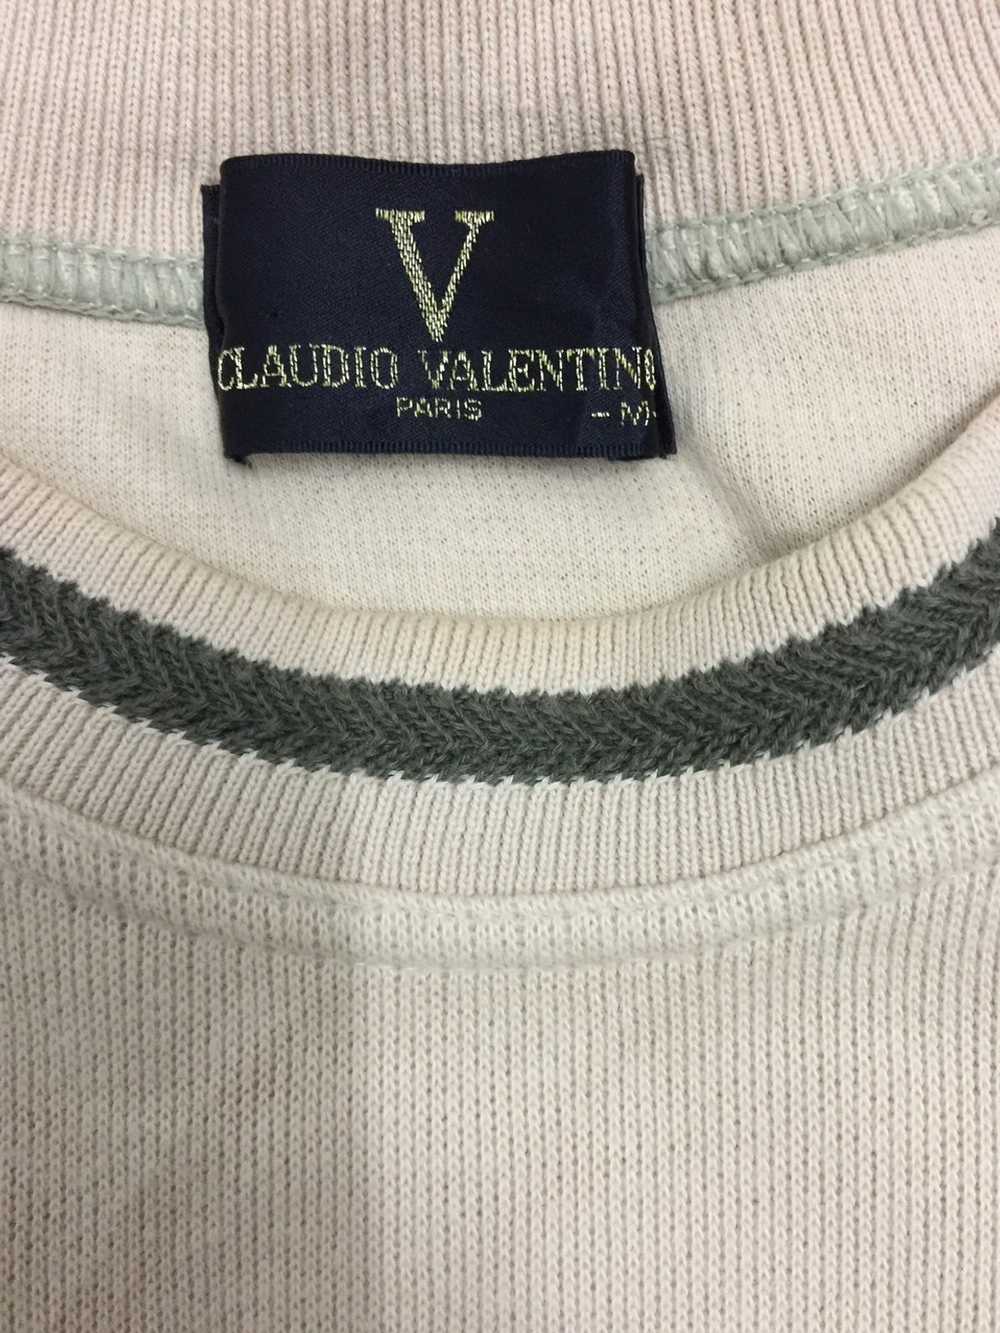 Valentino Claudio Valentino Paris Small Logo Swea… - image 4